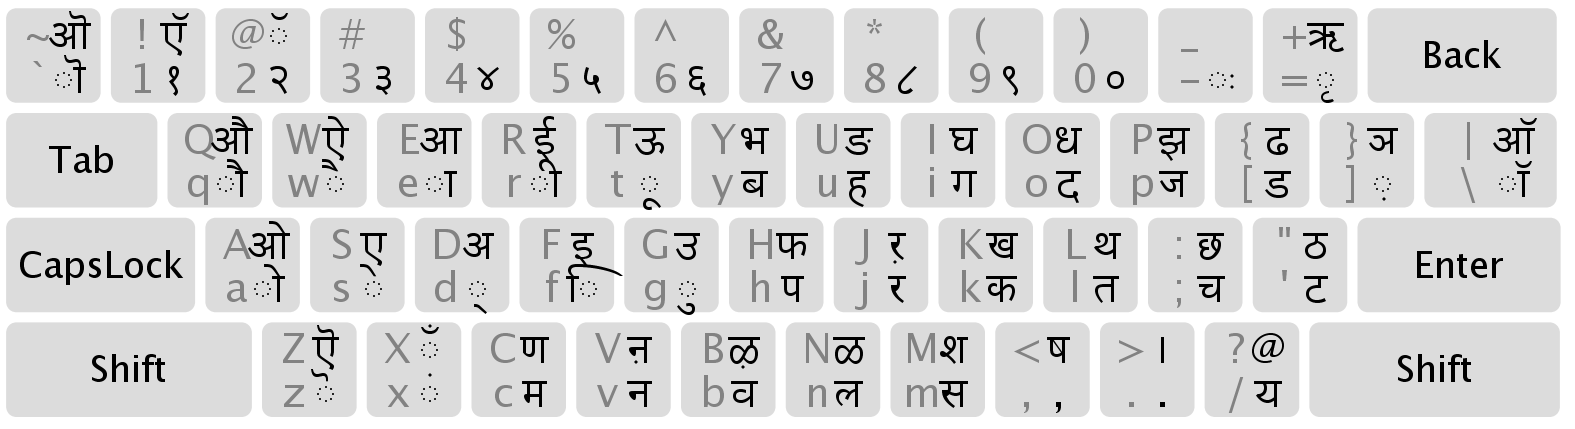 shree lipi gujarati font keyboard layout pdf